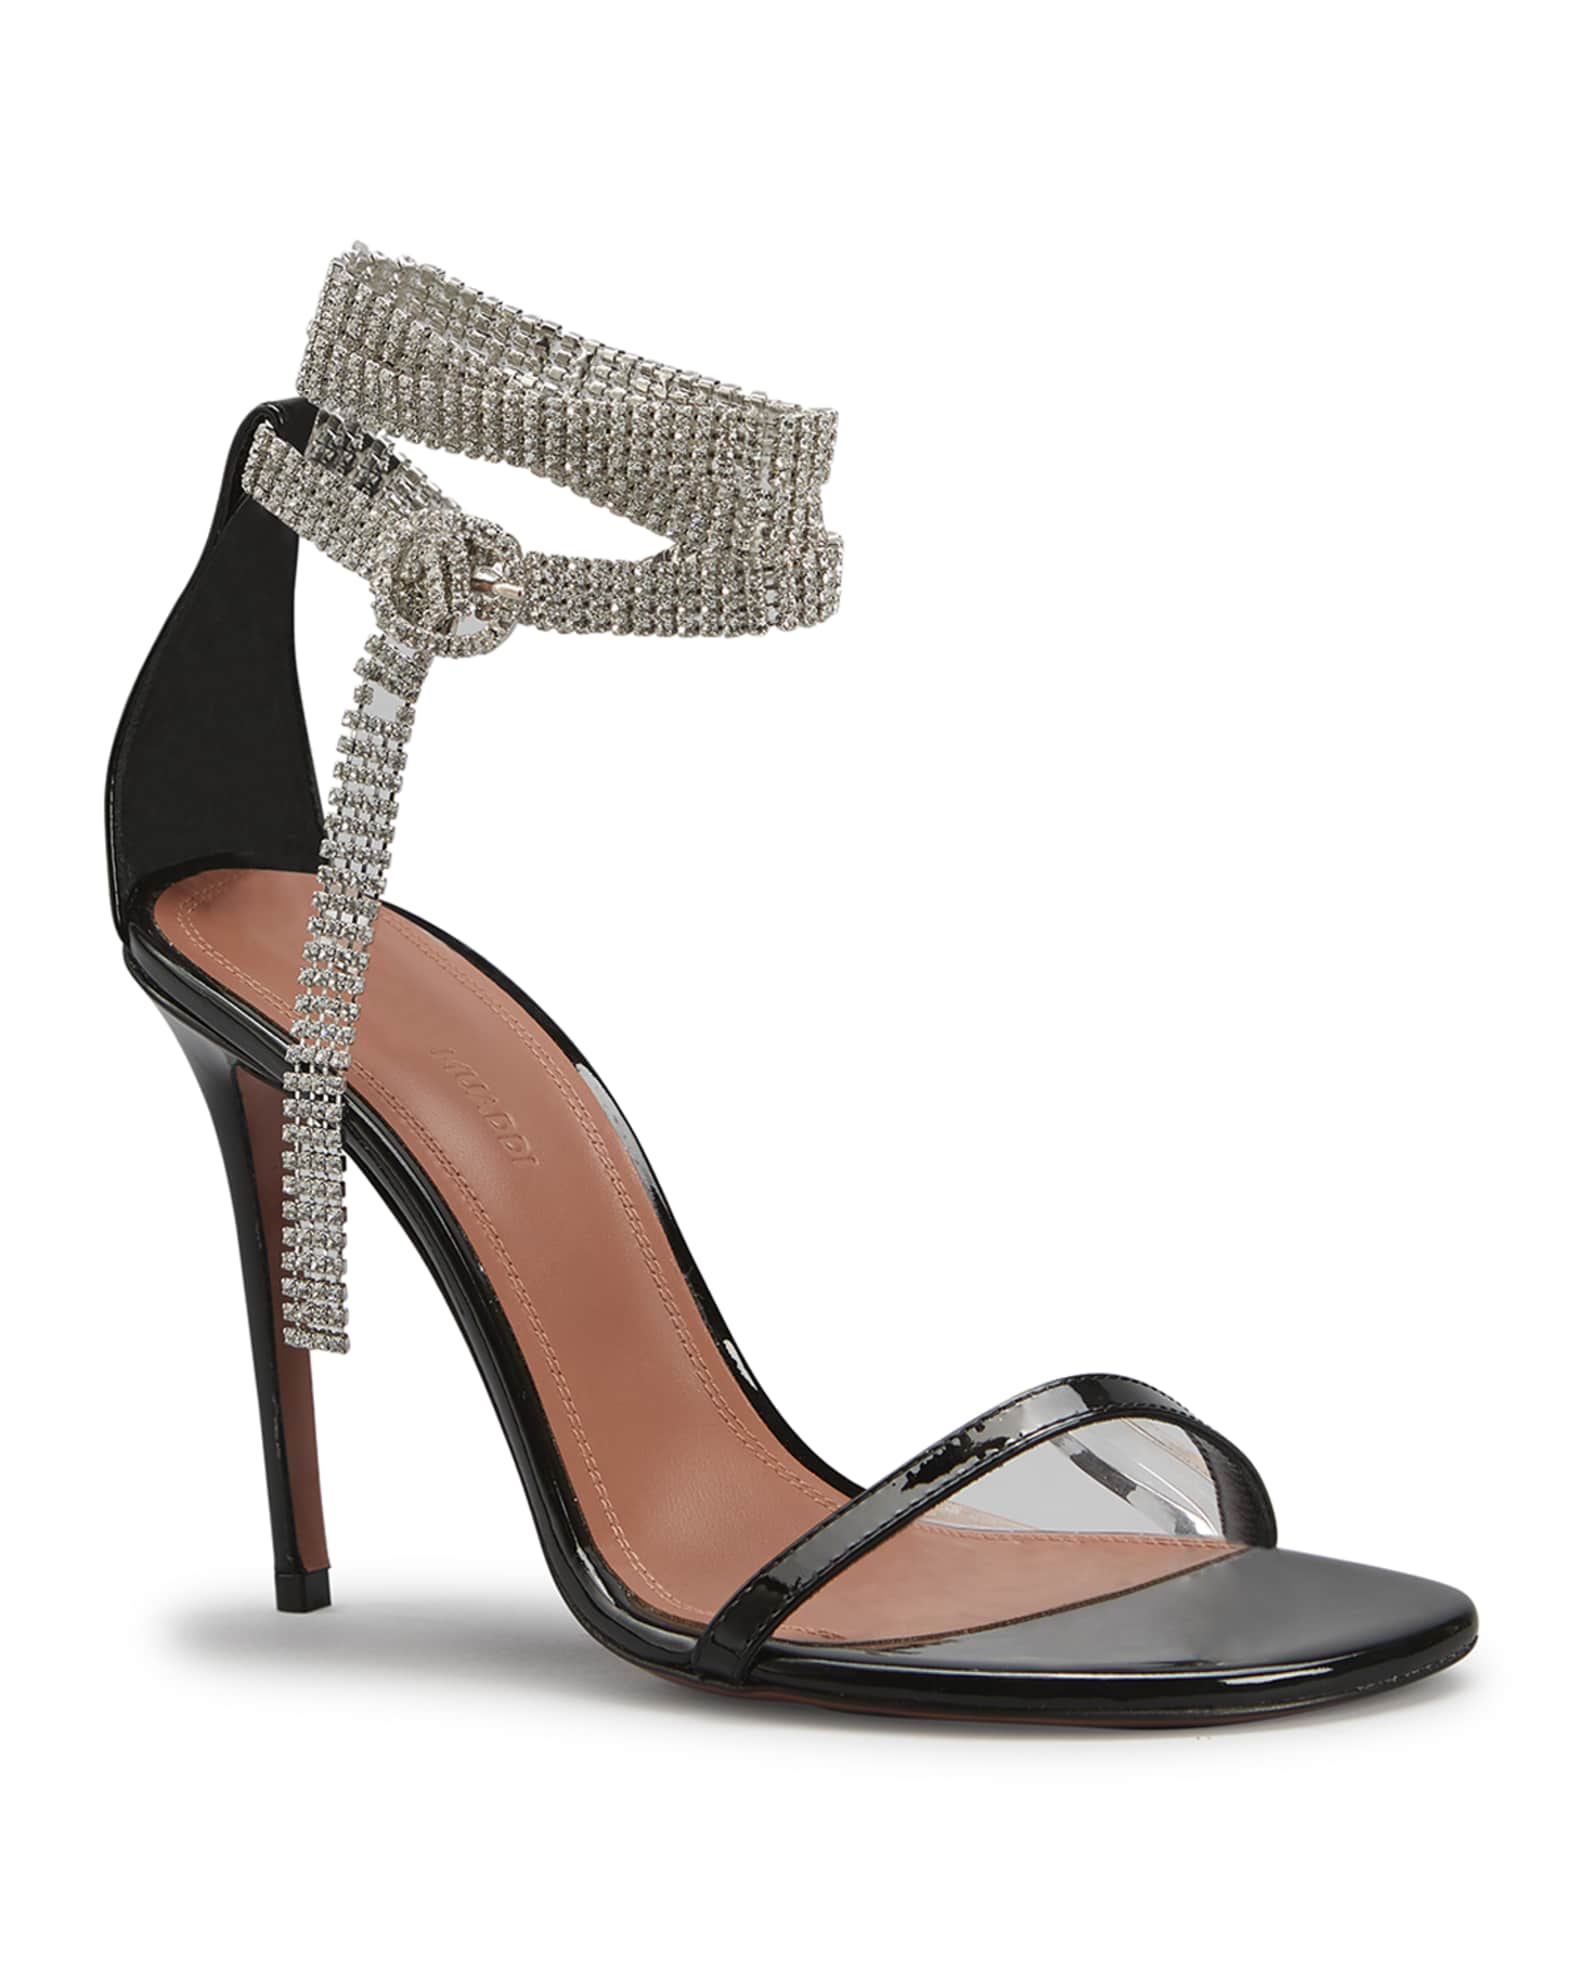 Amina Muaddi Giorgia Crystal-Wrap Patent Sandals | Neiman Marcus